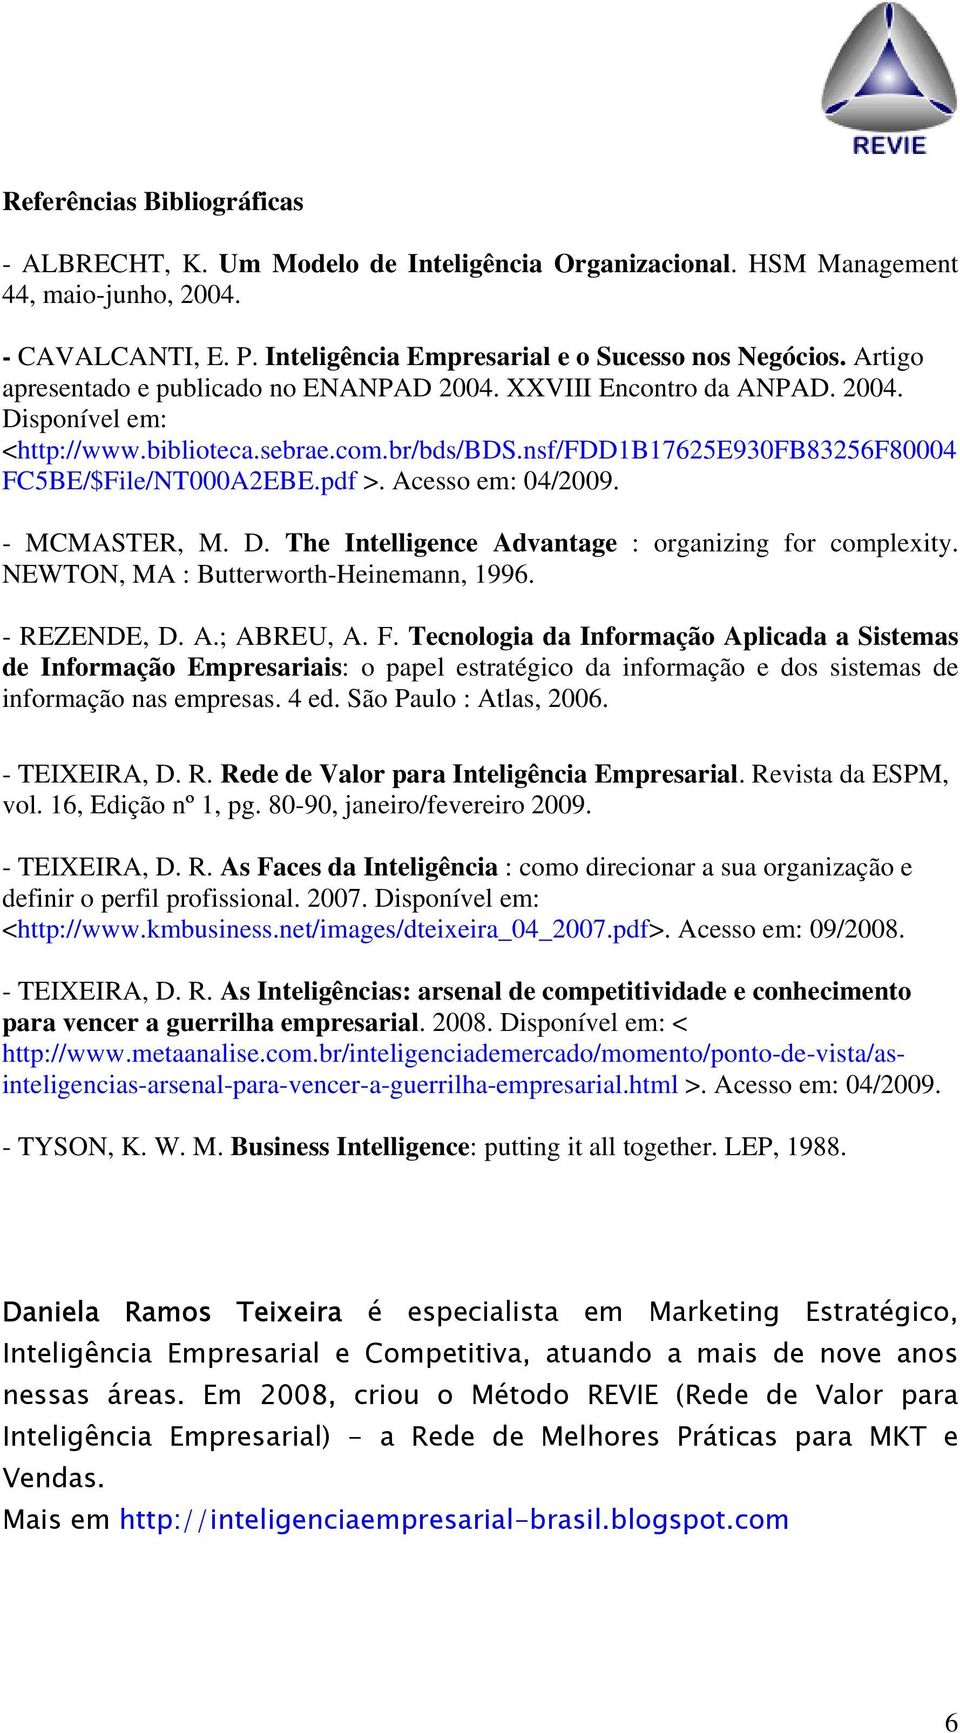 pdf >. Acesso em: 04/2009. - MCMASTER, M. D. The Intelligence Advantage : organizing for complexity. NEWTON, MA : Butterworth-Heinemann, 1996. - REZENDE, D. A.; ABREU, A. F.